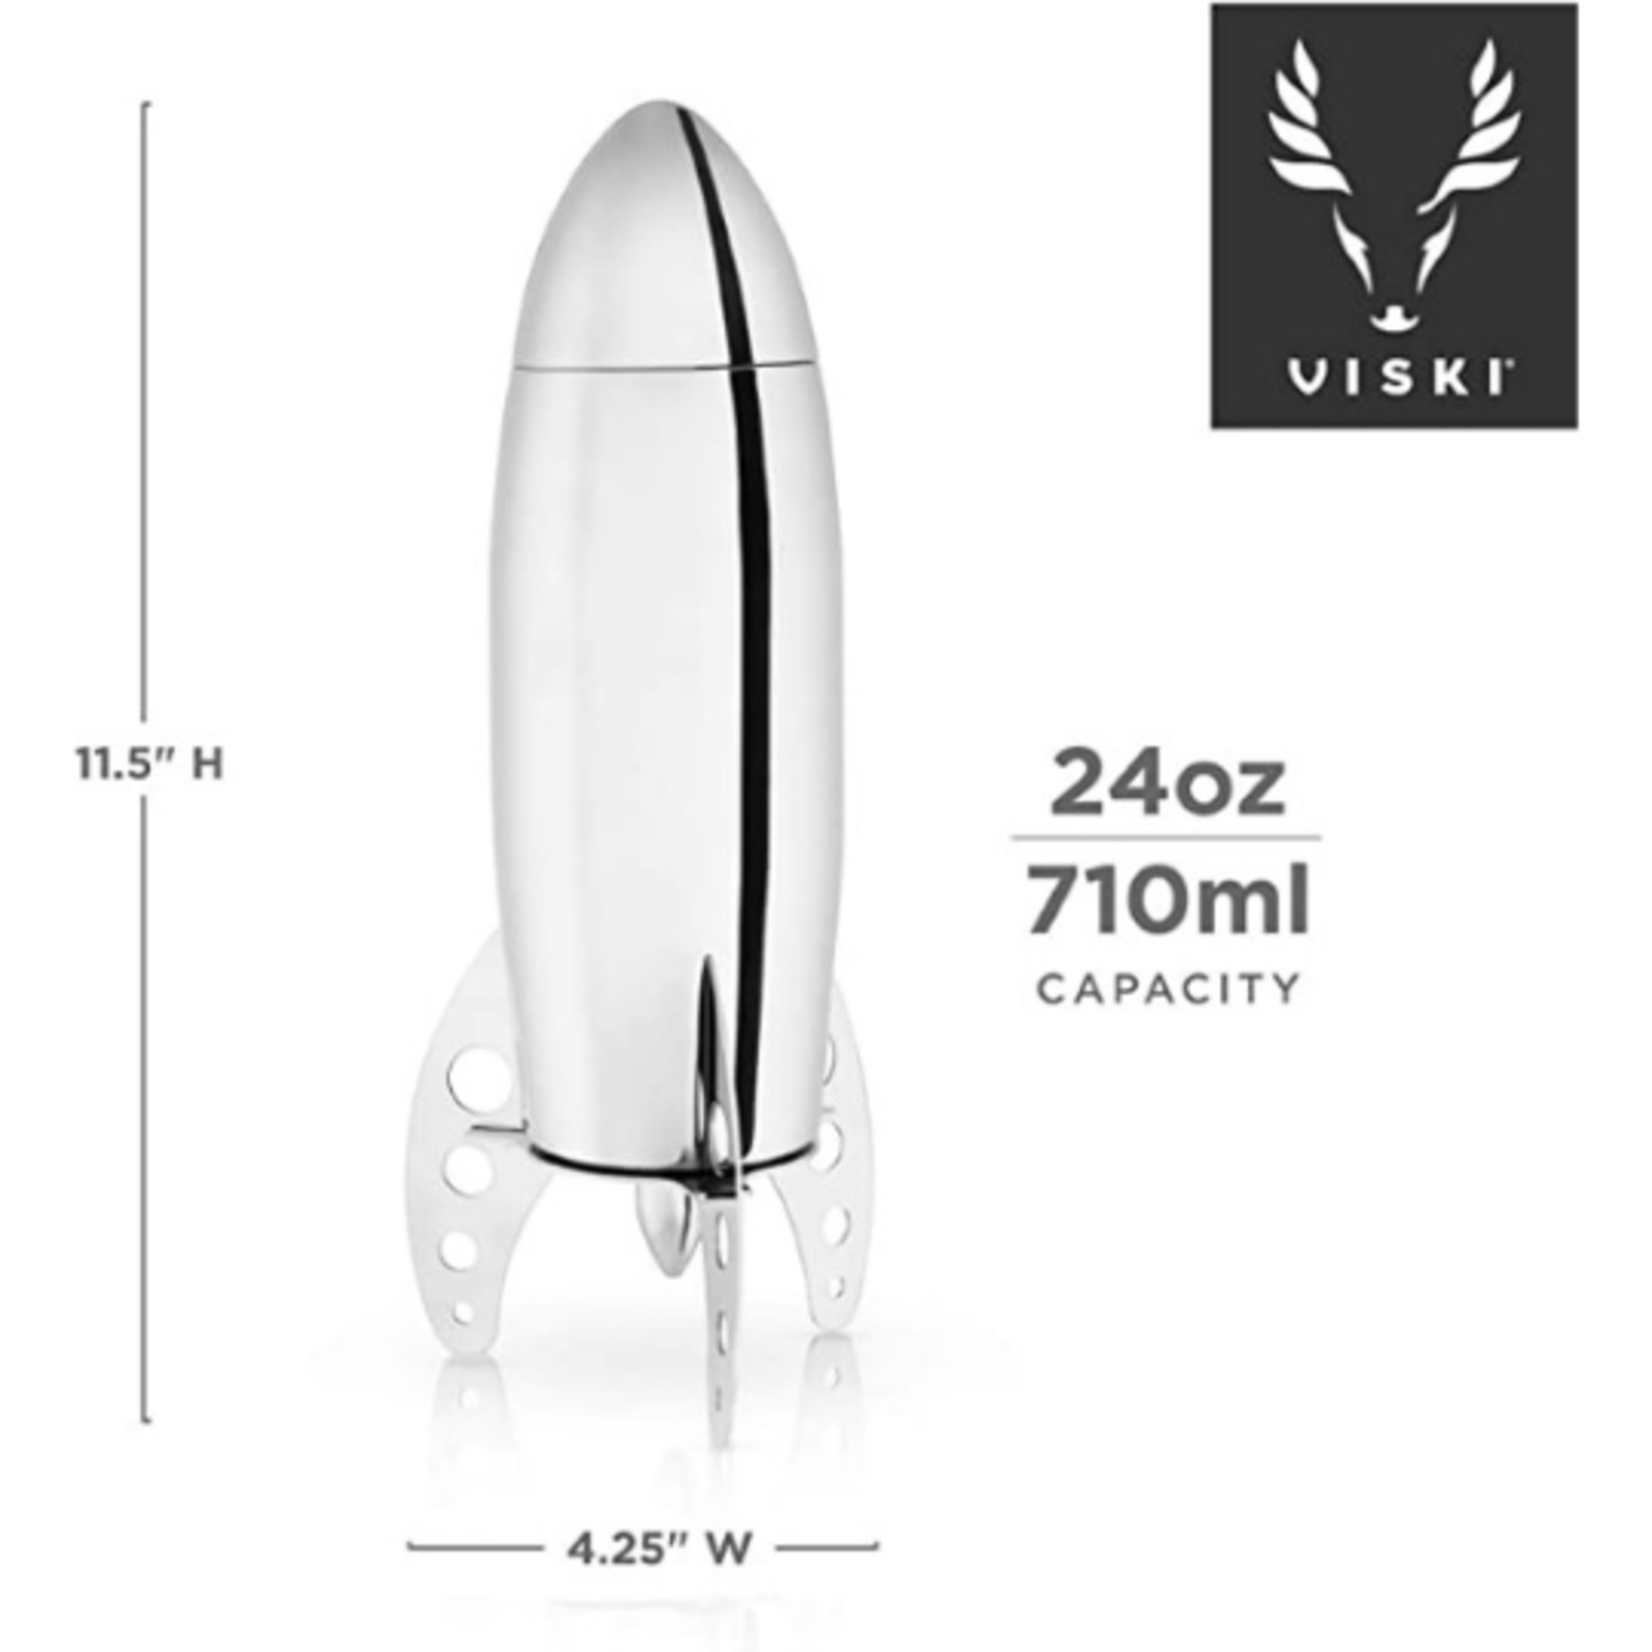 Steel Rocket Shaped Cocktail Shaker